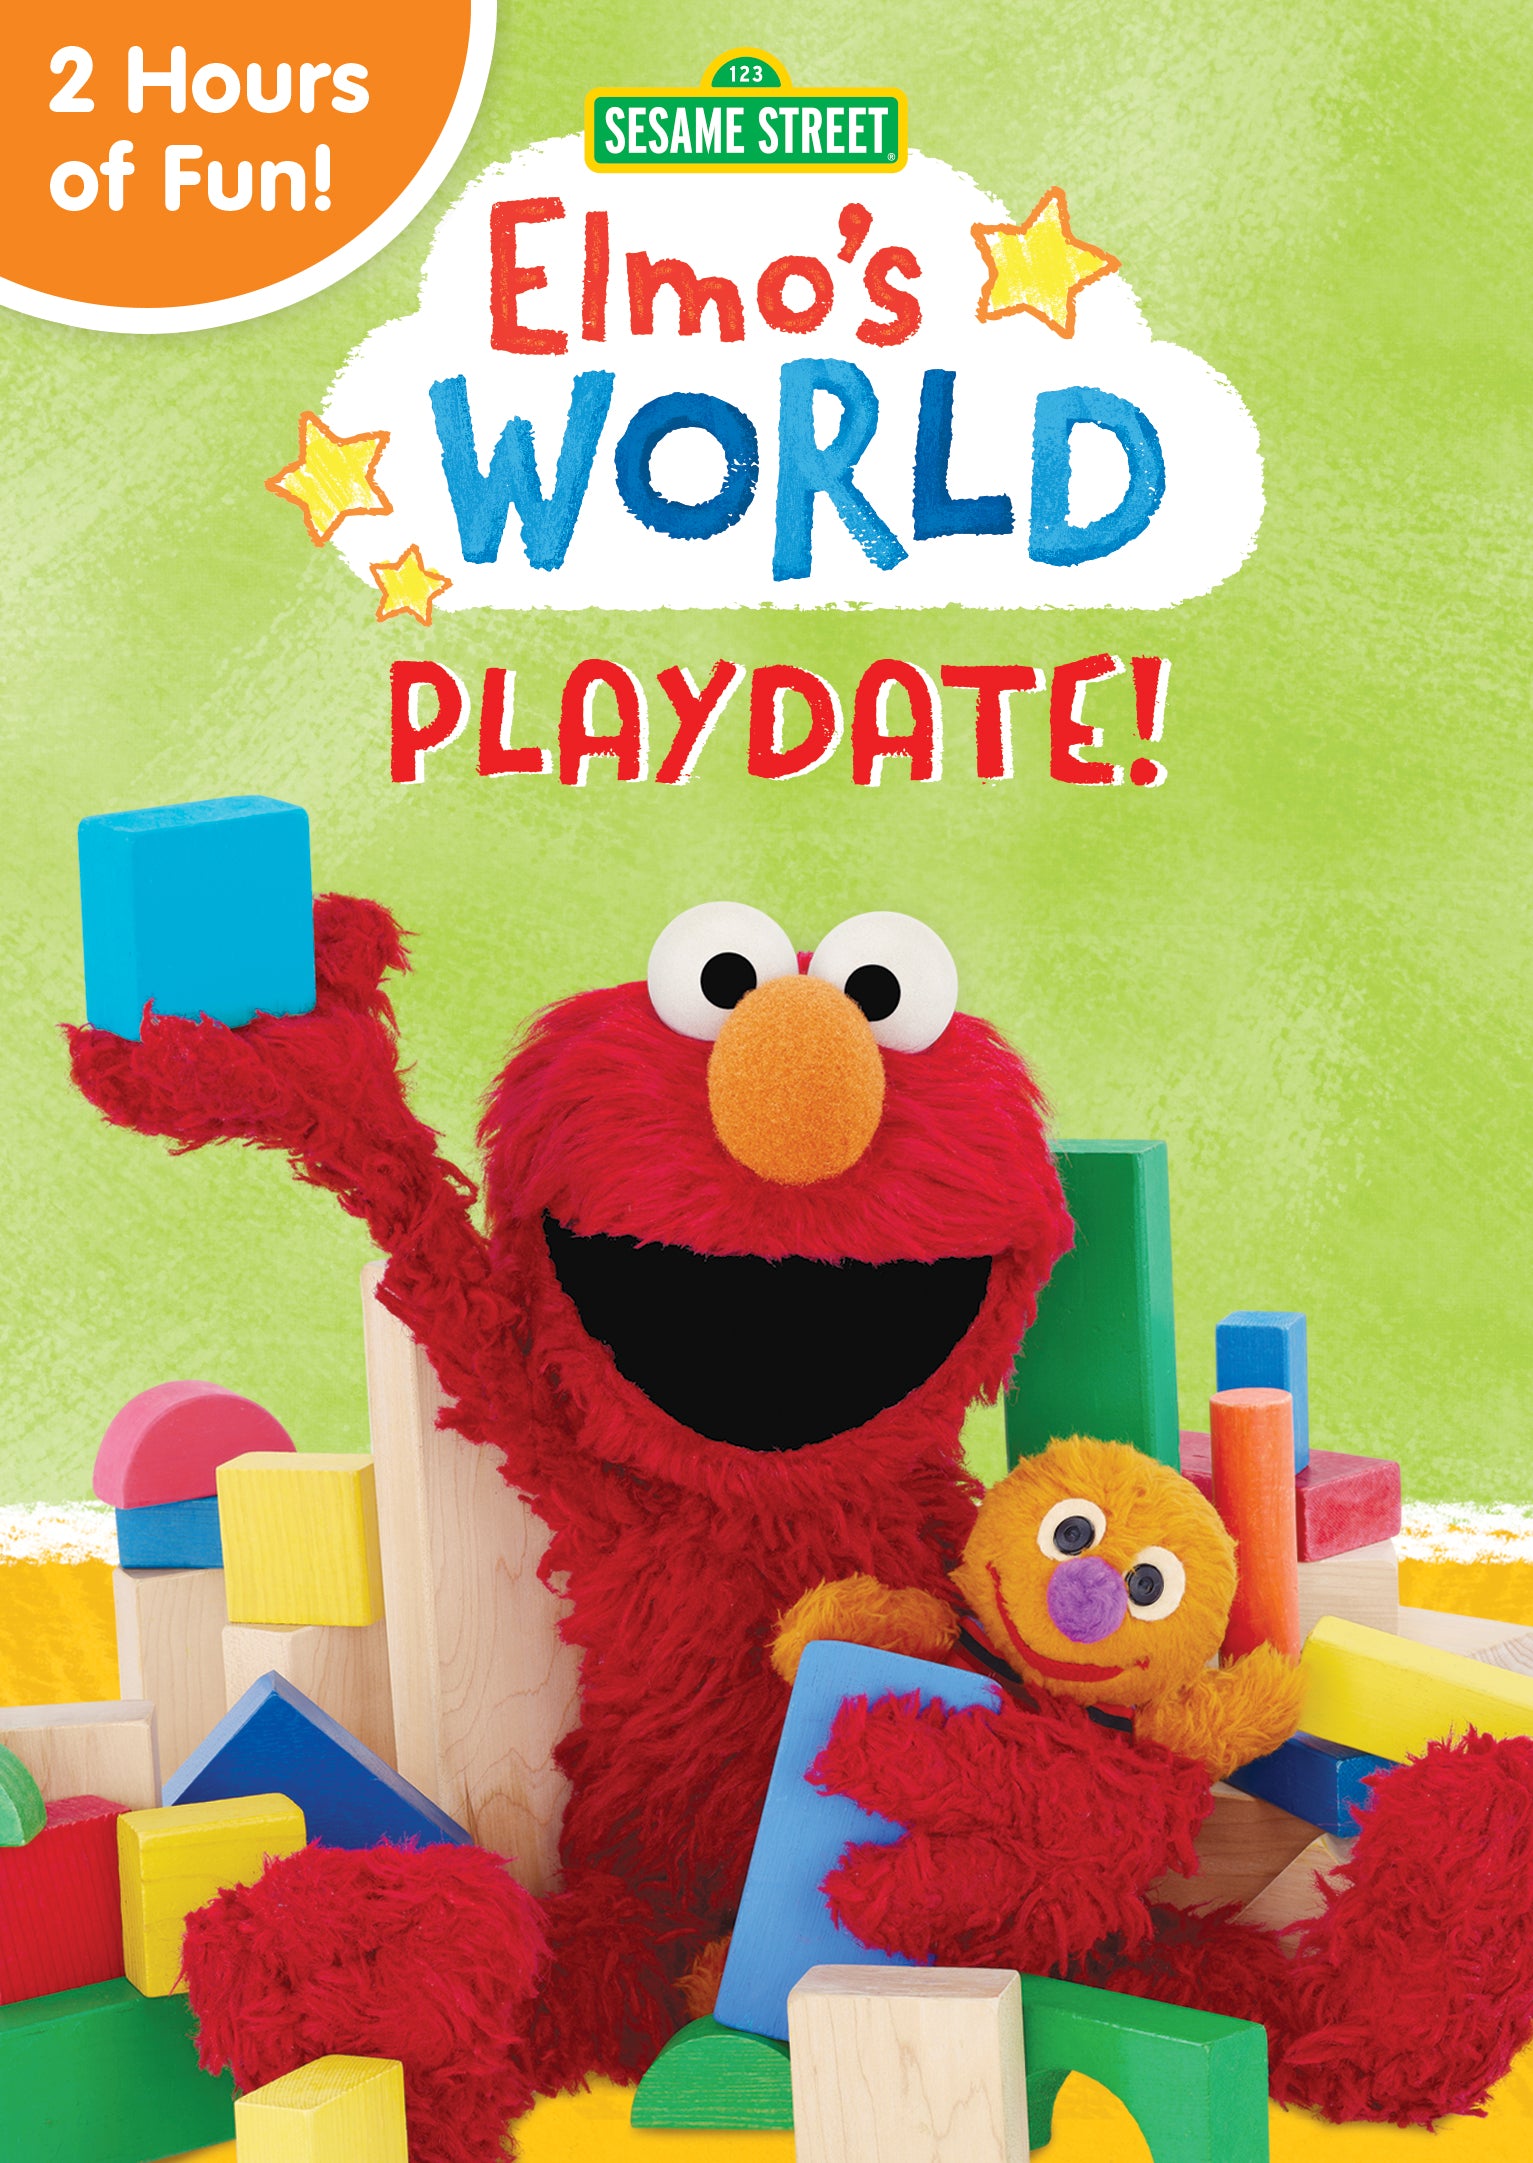 Sesame Street: Elmo's World - Playdate! cover art